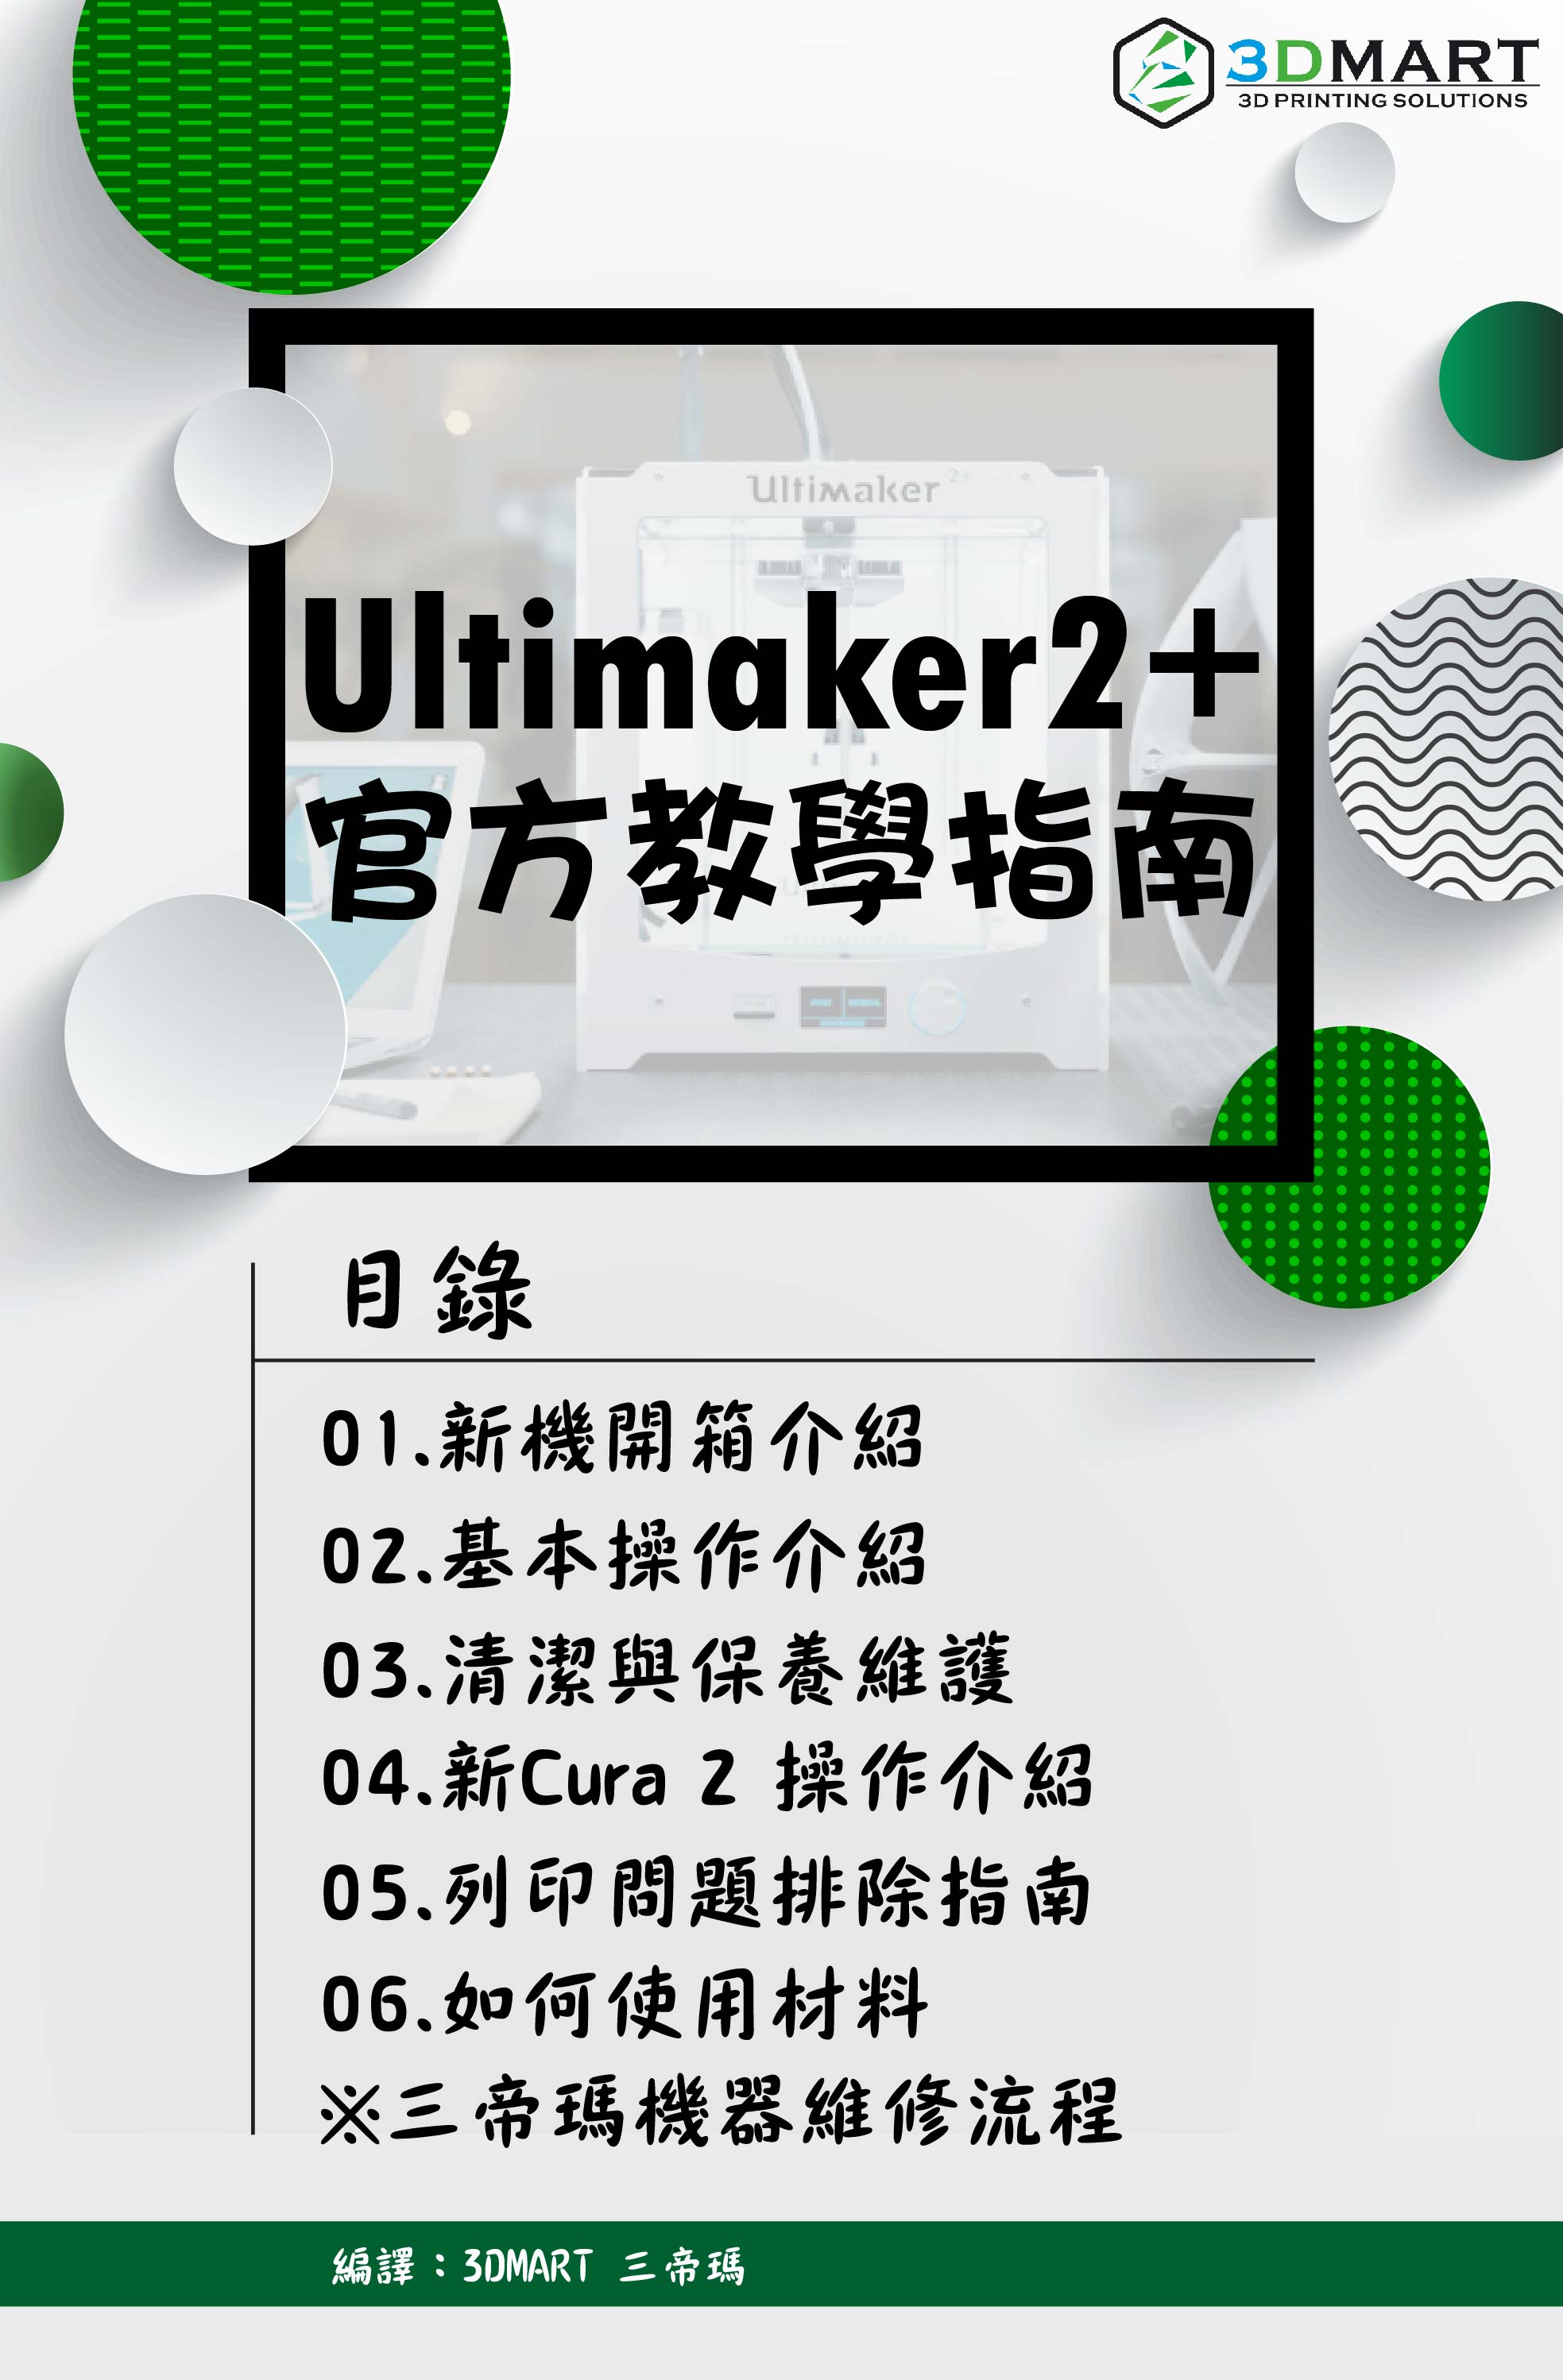 Ultimaker 2+教學全攻略